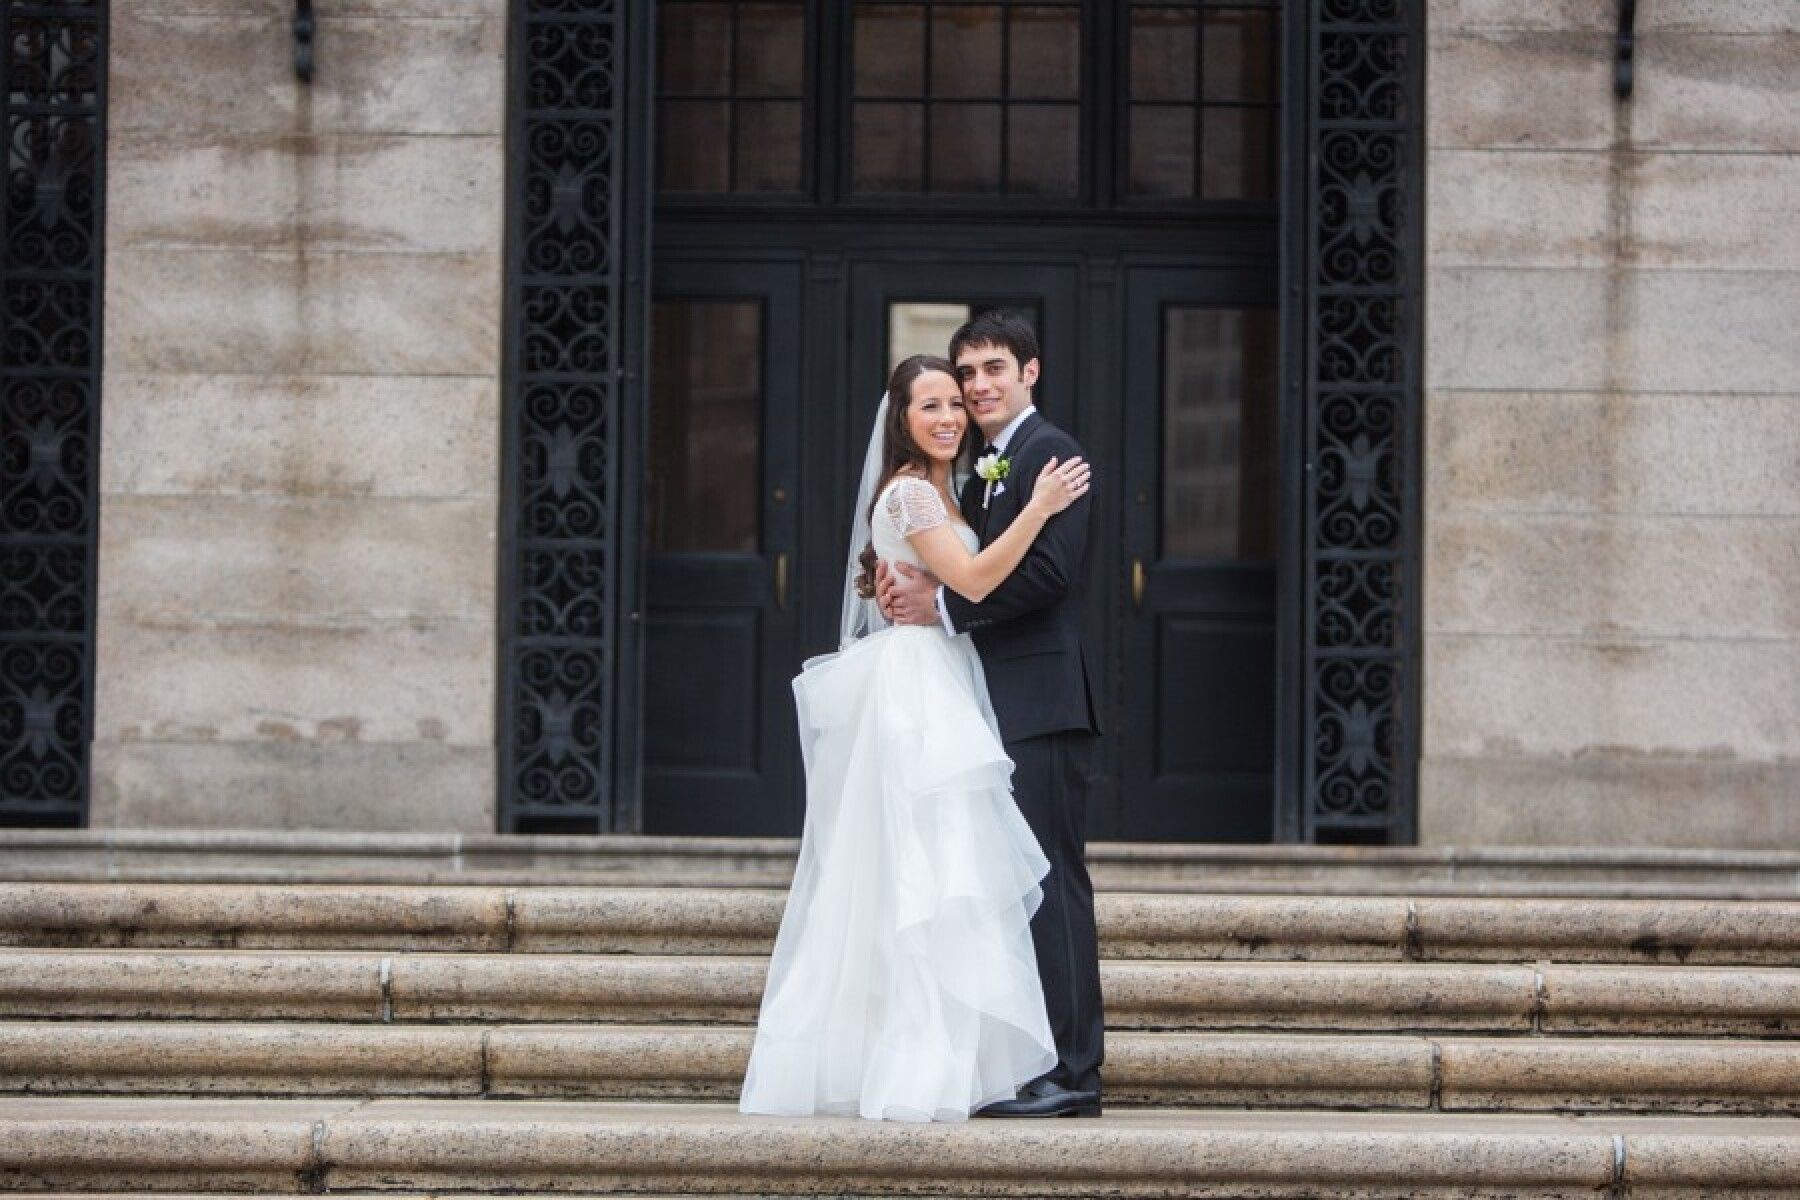 Leah & Michael, Wedding, Boston Public Library